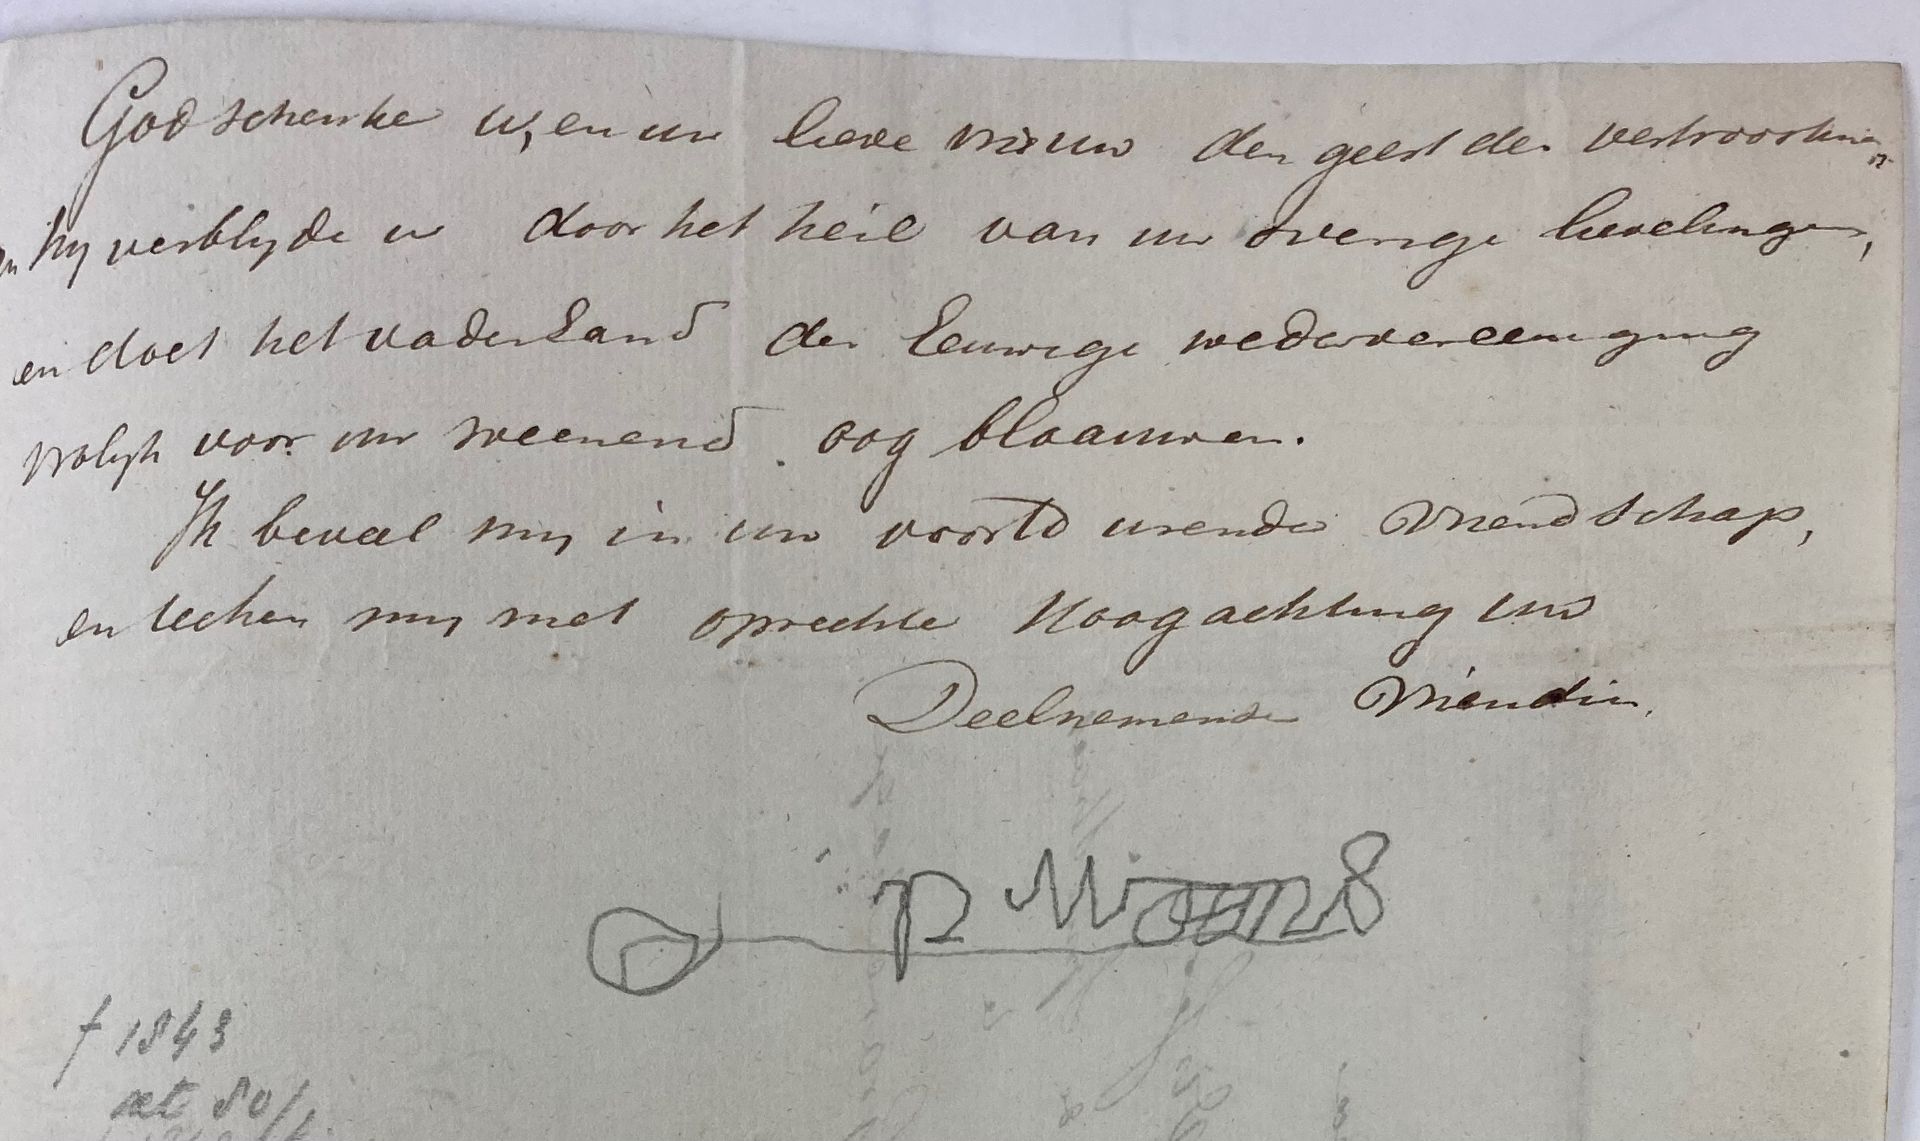 MOENS, Petronella (1762-1843), author. Letter of comfort to S. de Visser, book